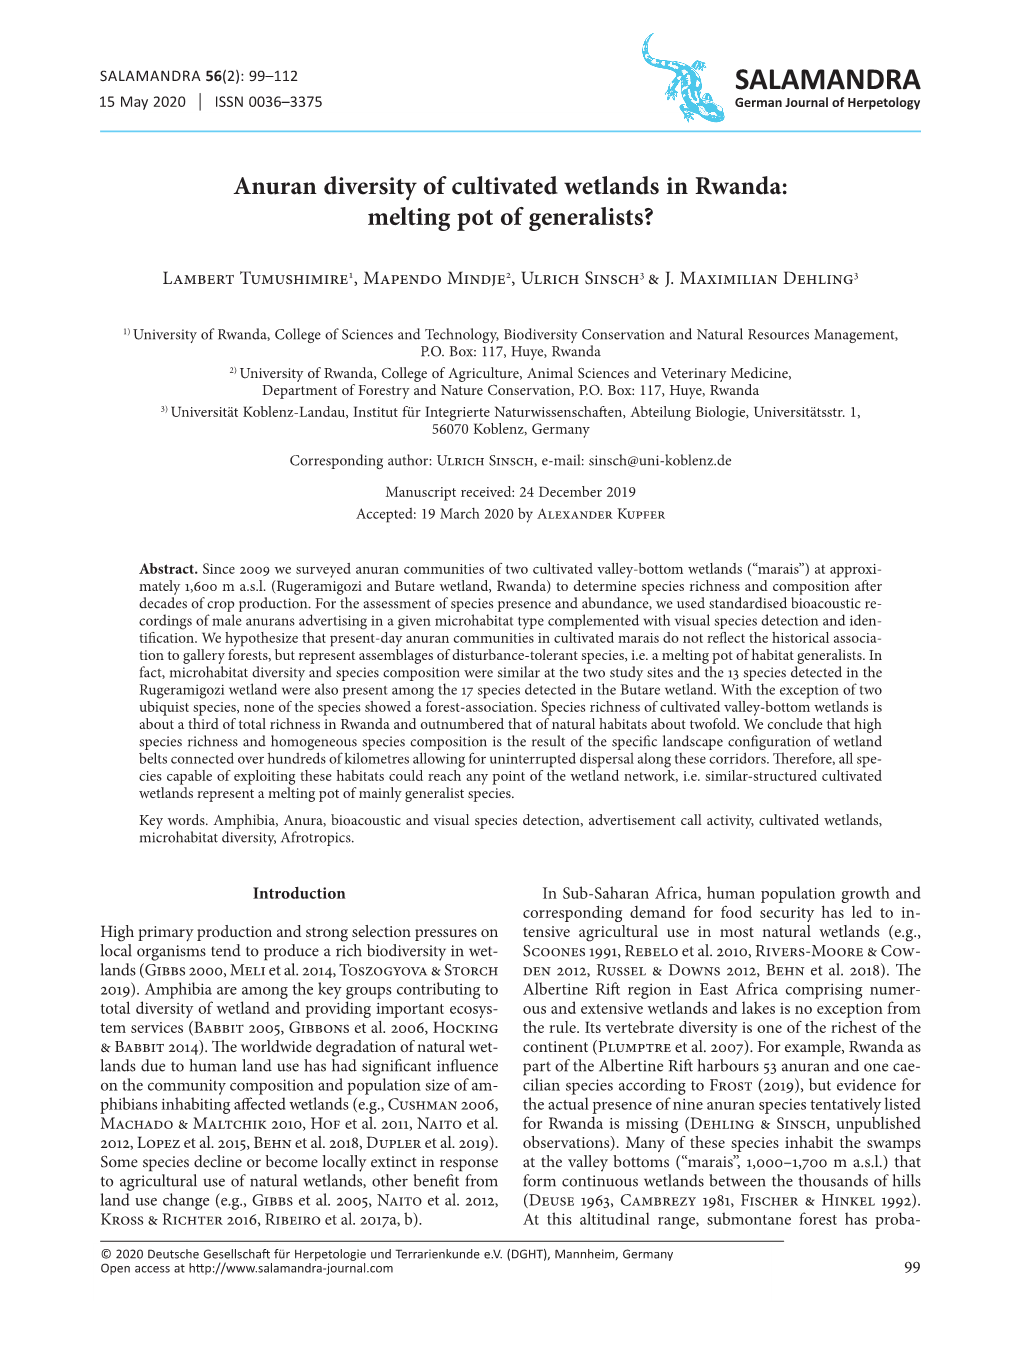 Anuran Diversity of Cultivated Wetlands in Rwanda: Melting Pot of Generalists?SALAMANDRA 15 May 2020 ISSN 0036–3375 German Journal of Herpetology